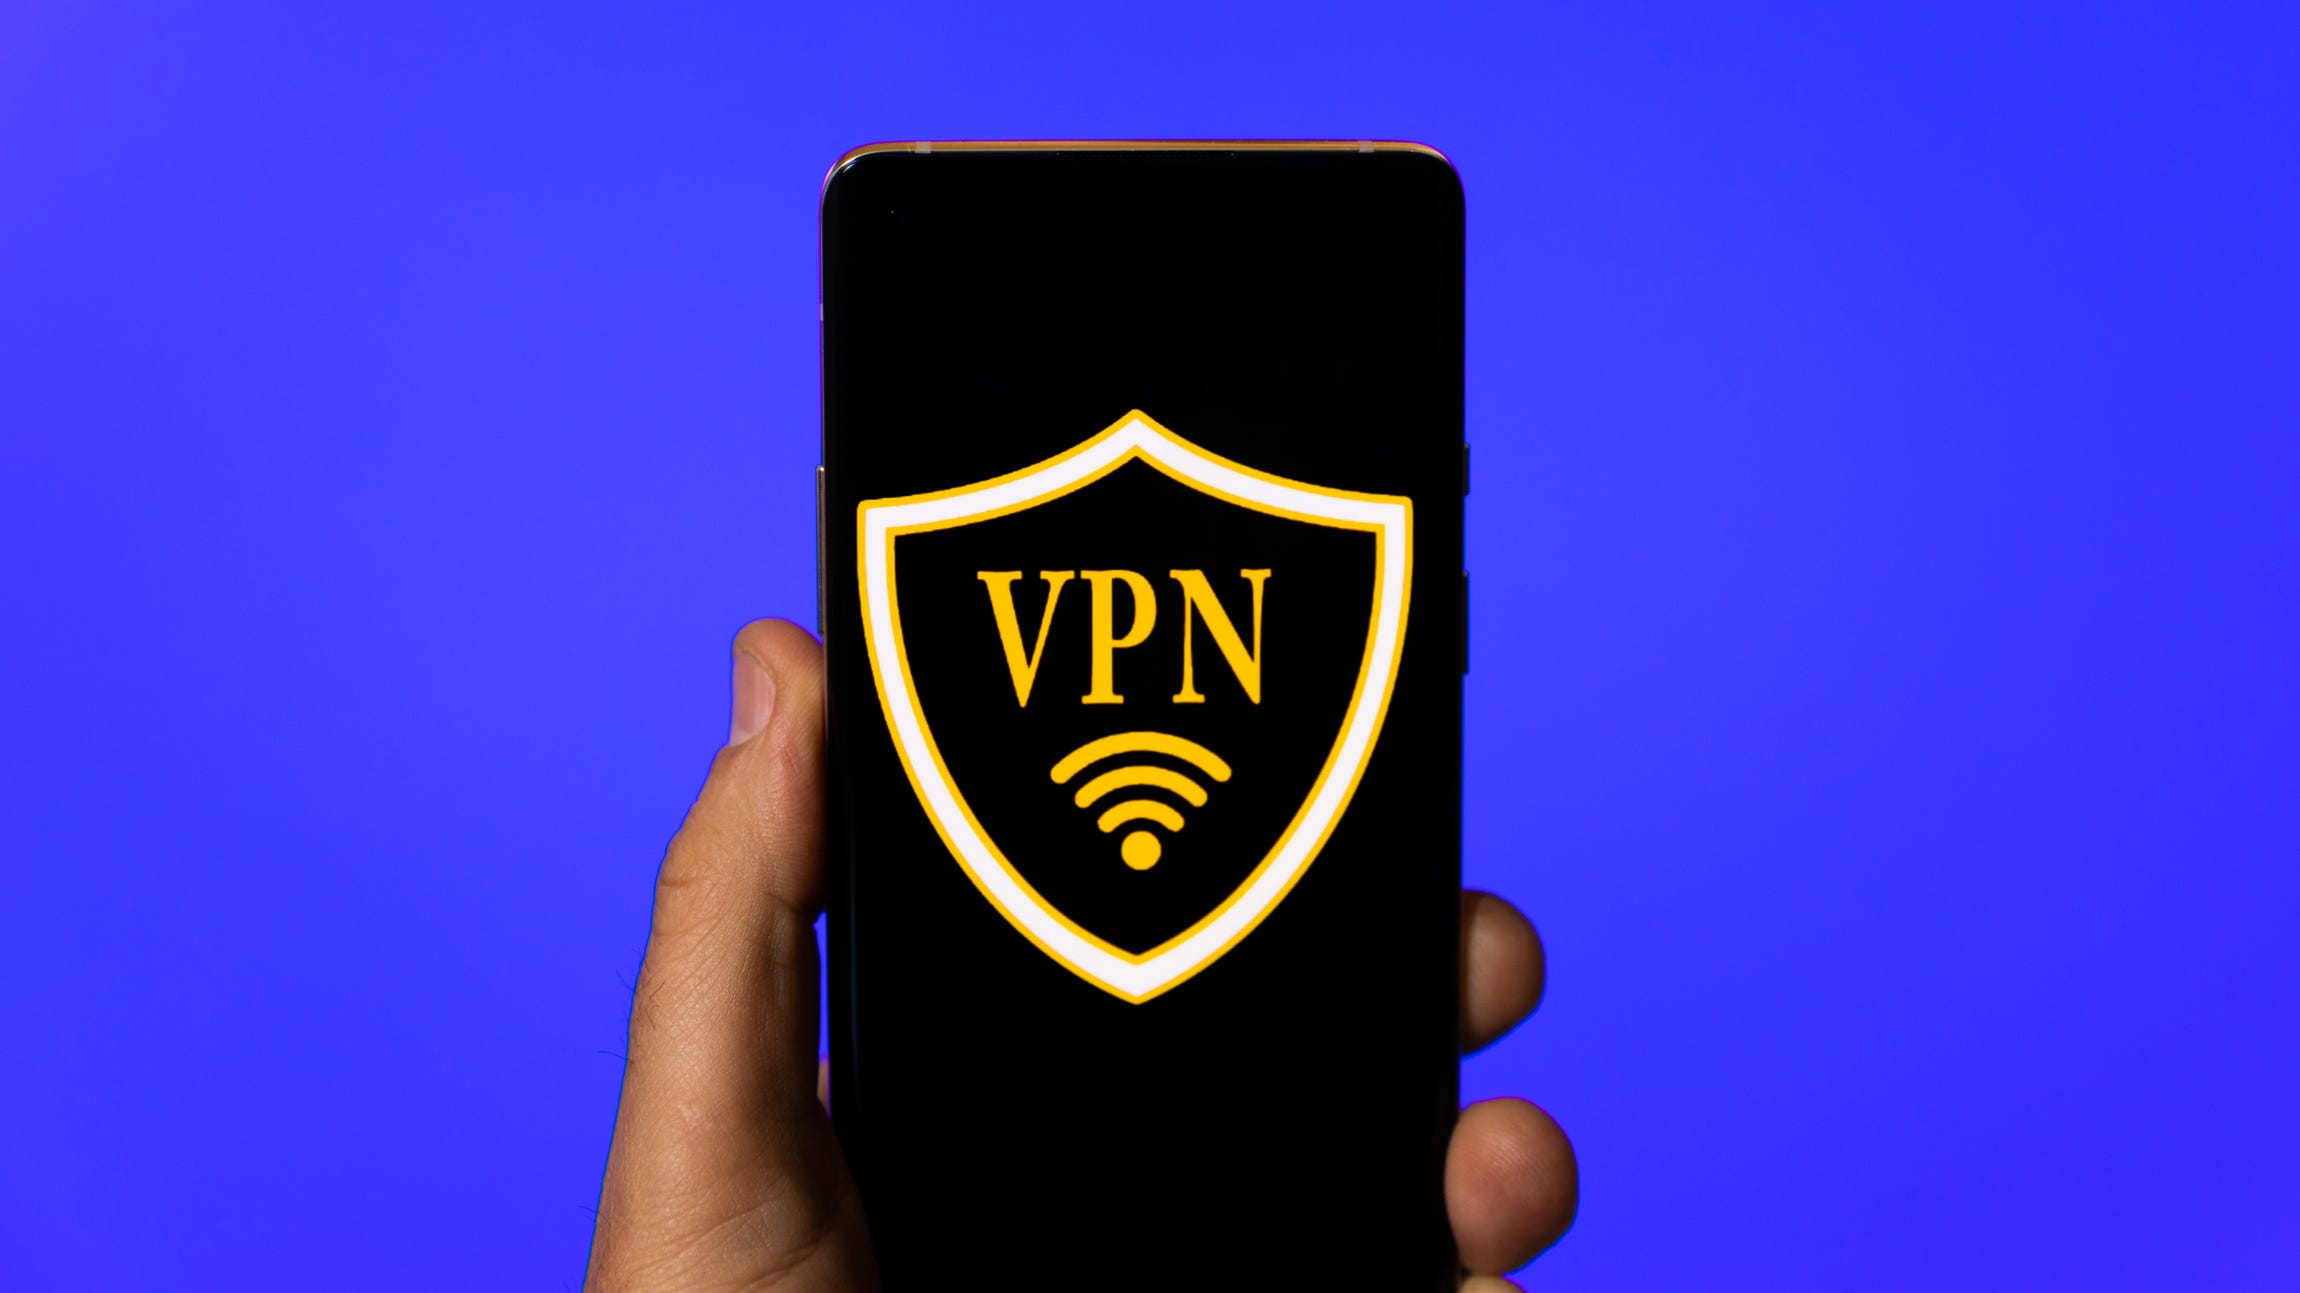 VPN logo on black phone screen